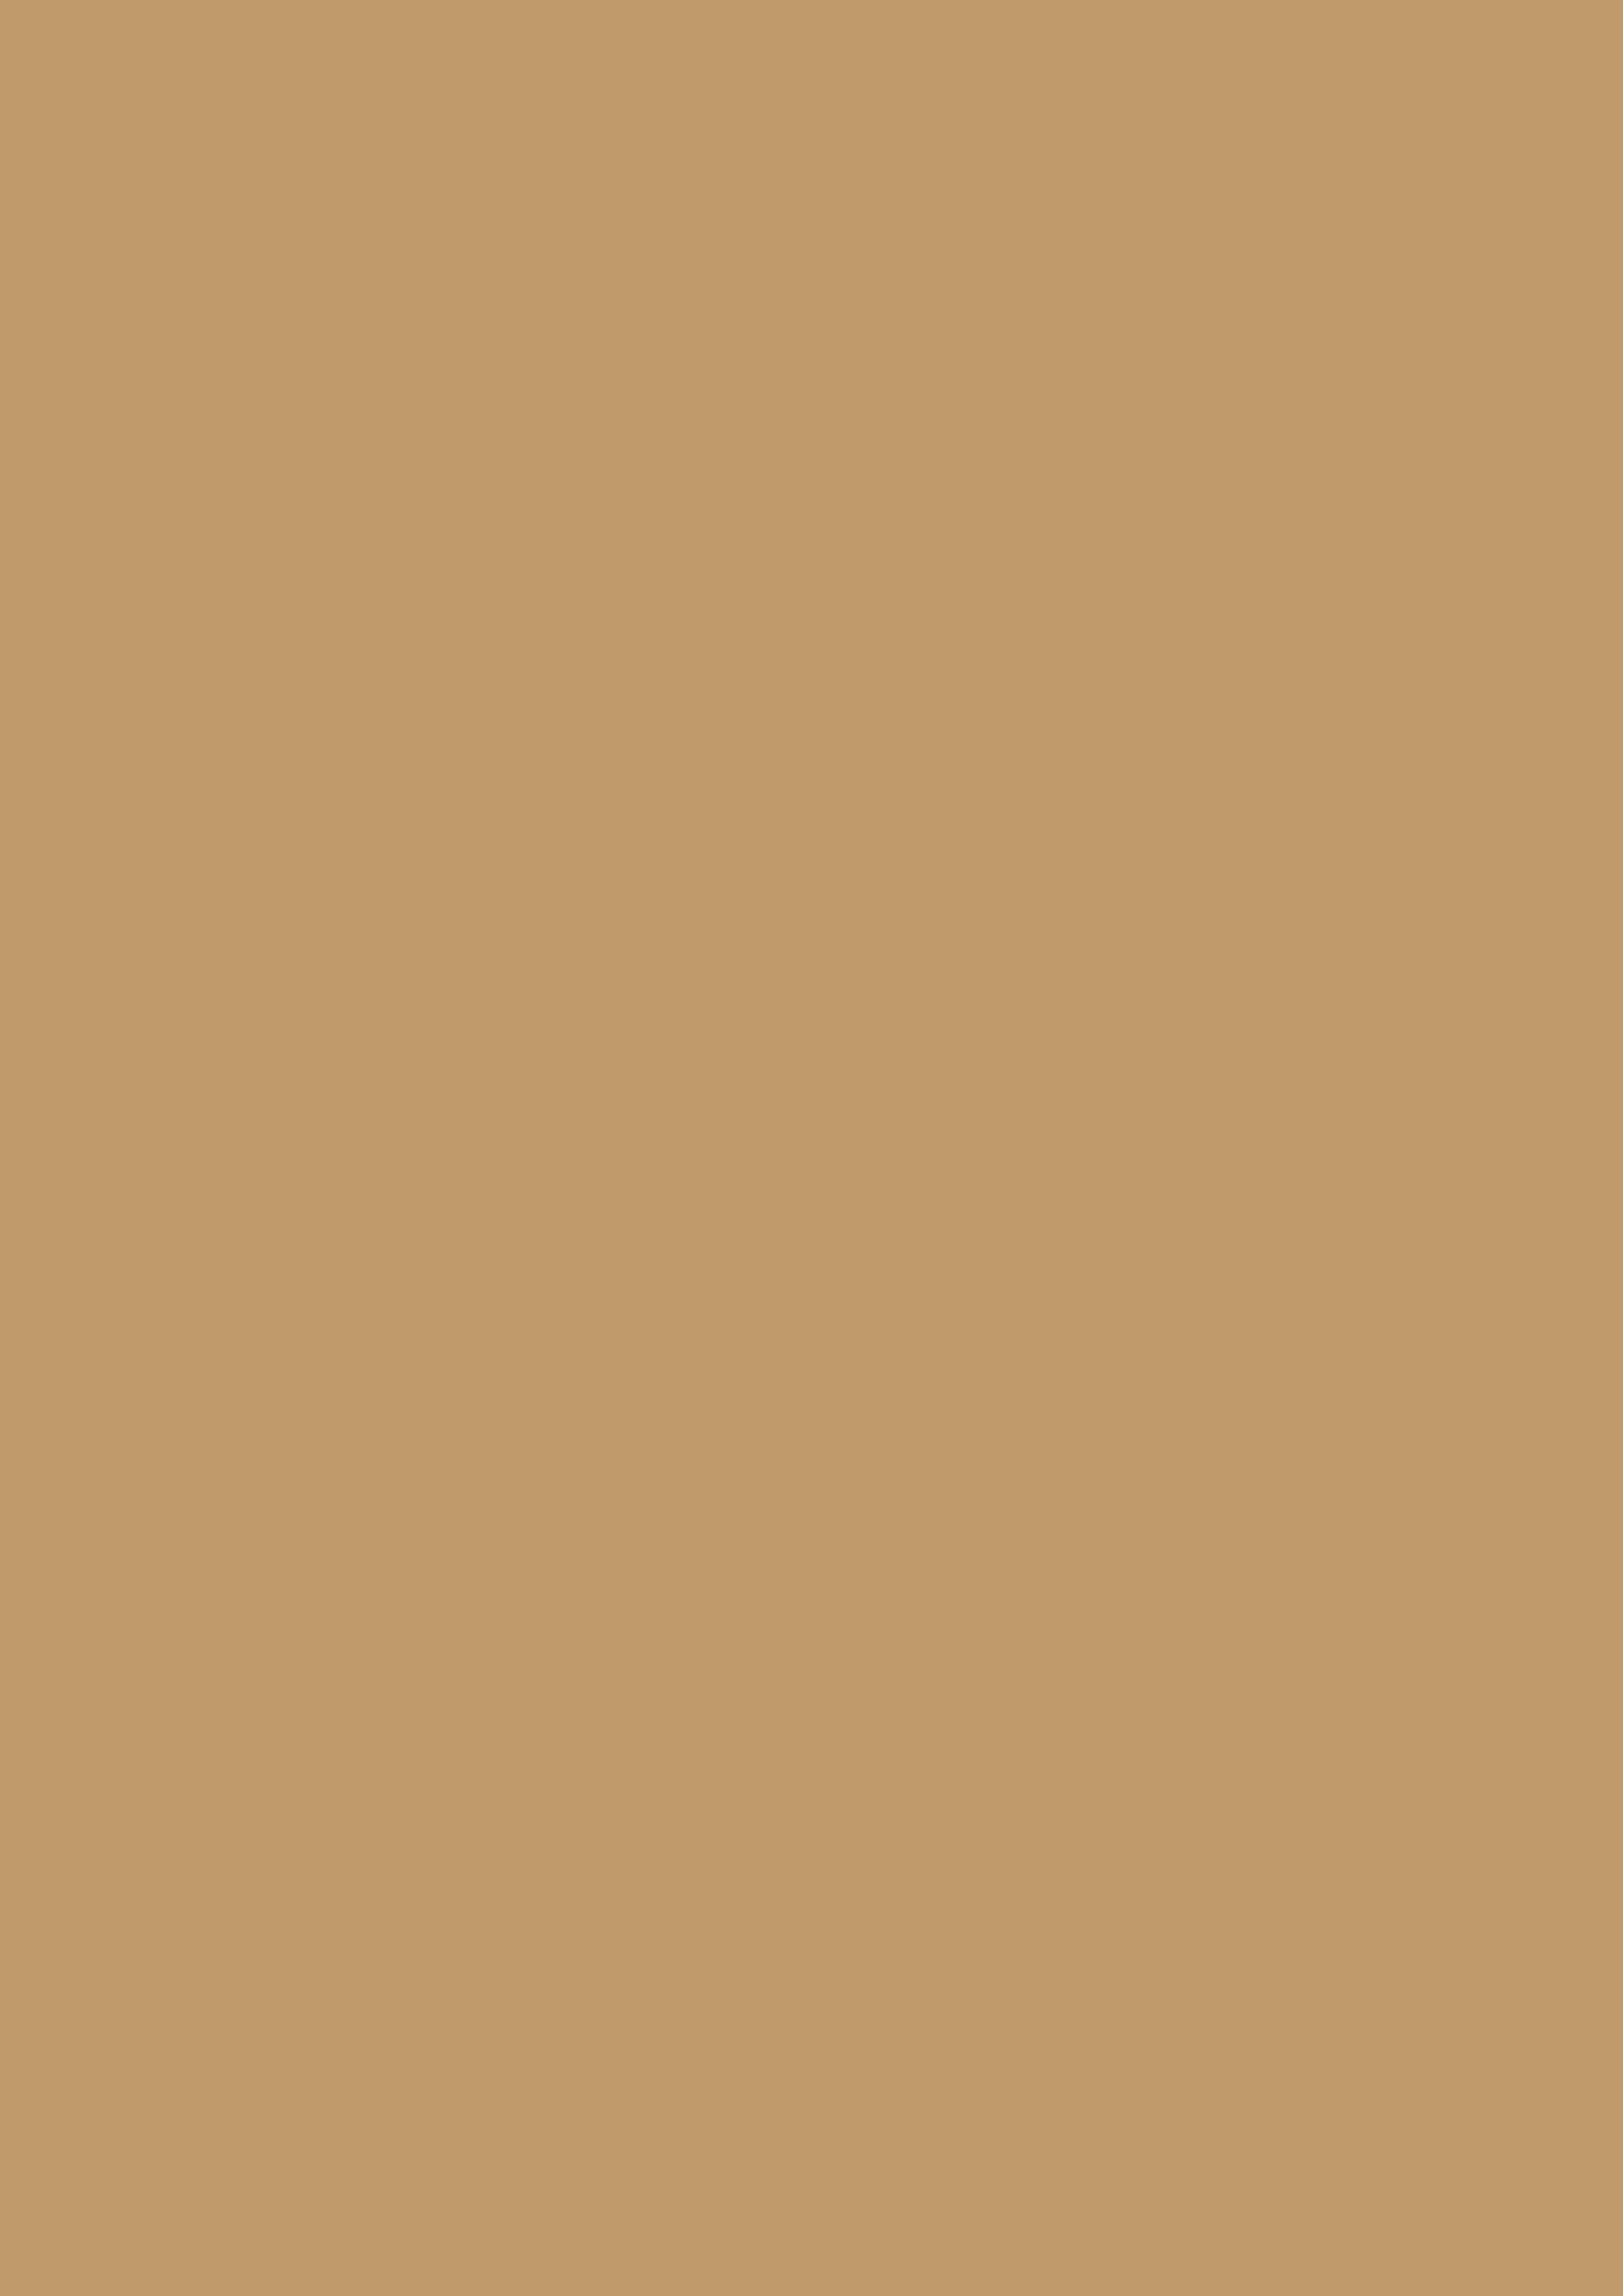 2480x3508 Camel Solid Color Background